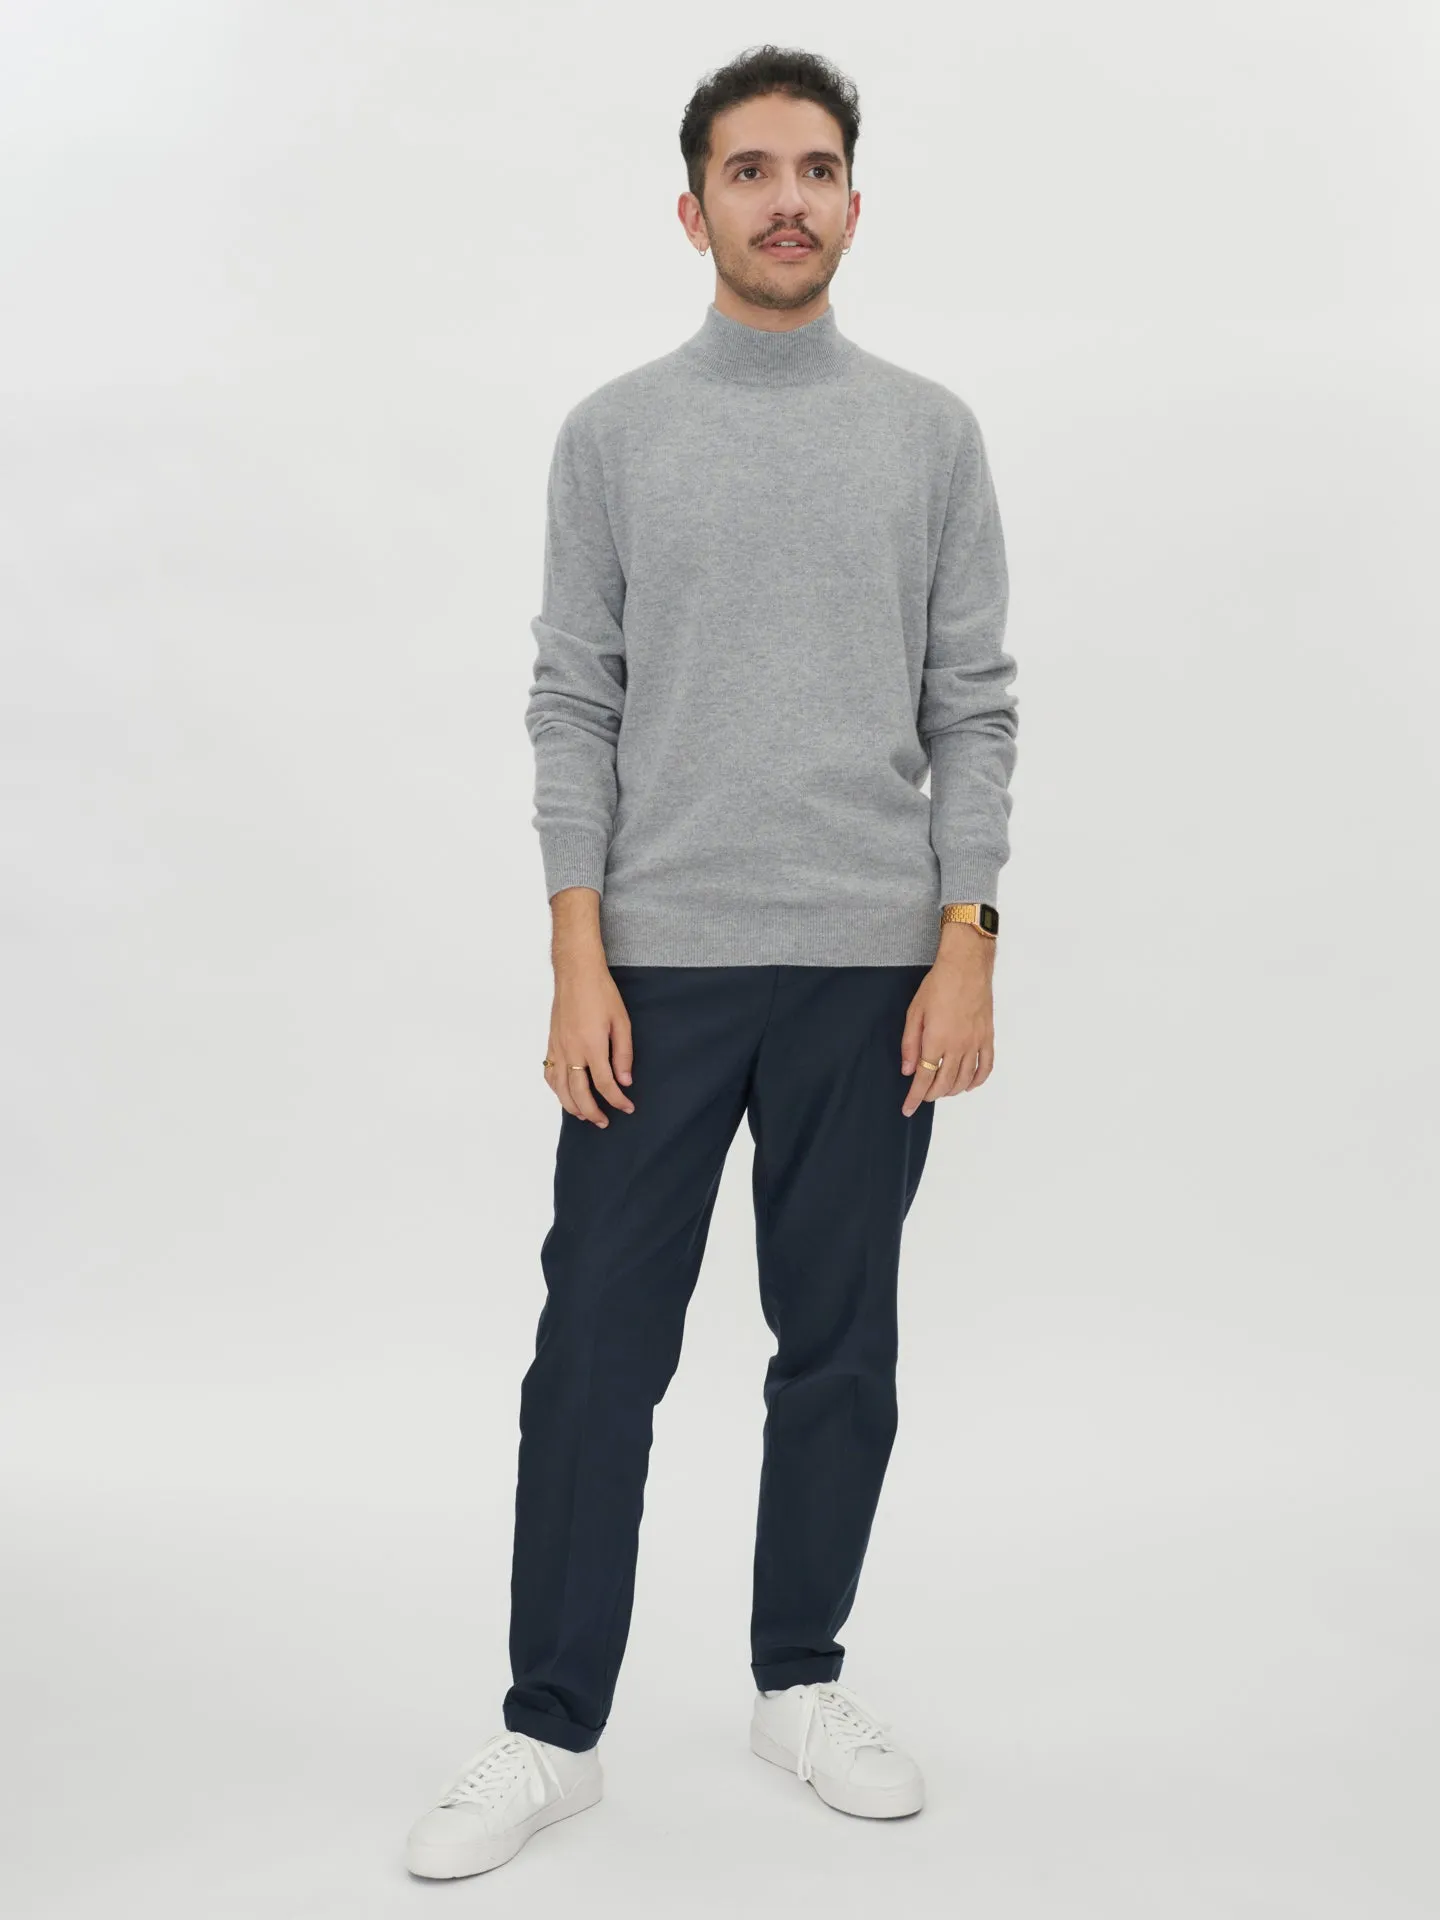 Men's Cashmere Mock Neck Sweater Light Gray - Gobi Cashmere